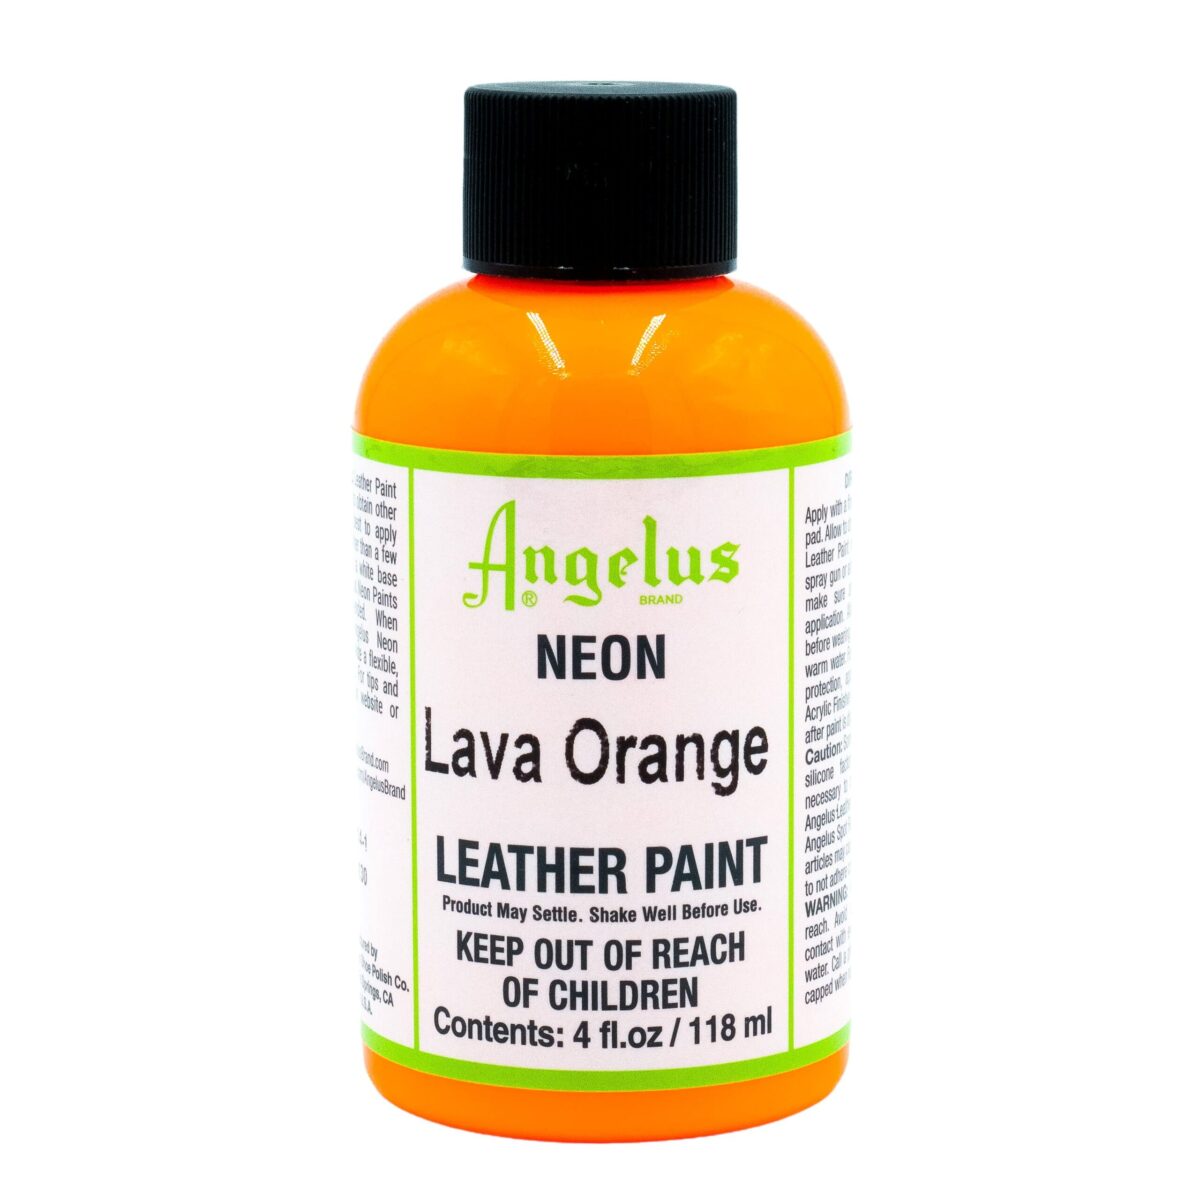 Angelus Leather Paint Neon Lava Orange 118ml